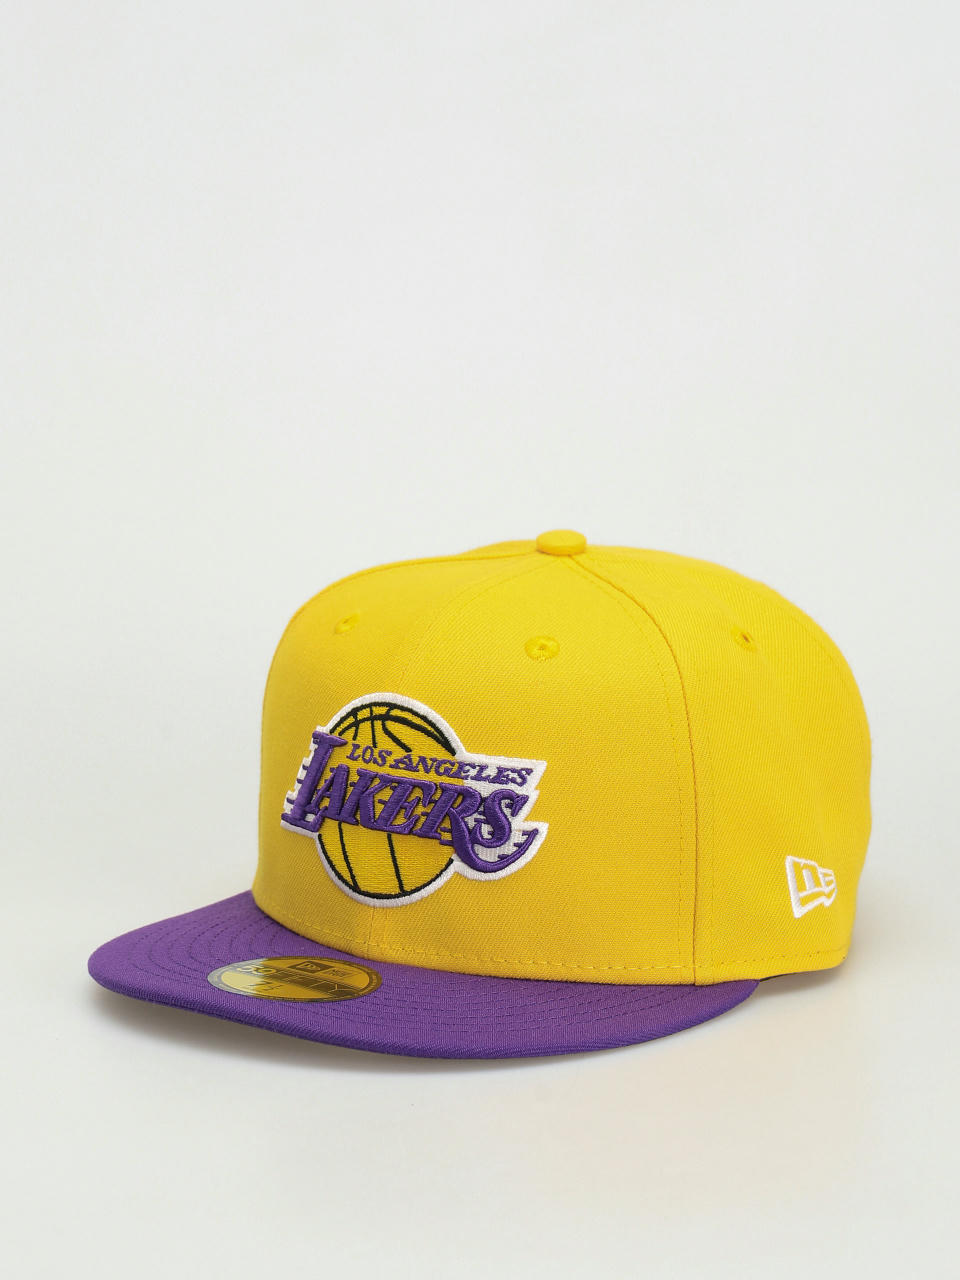 Gorra New Era Los Angeles Lakers 59FIFTY nba New Era